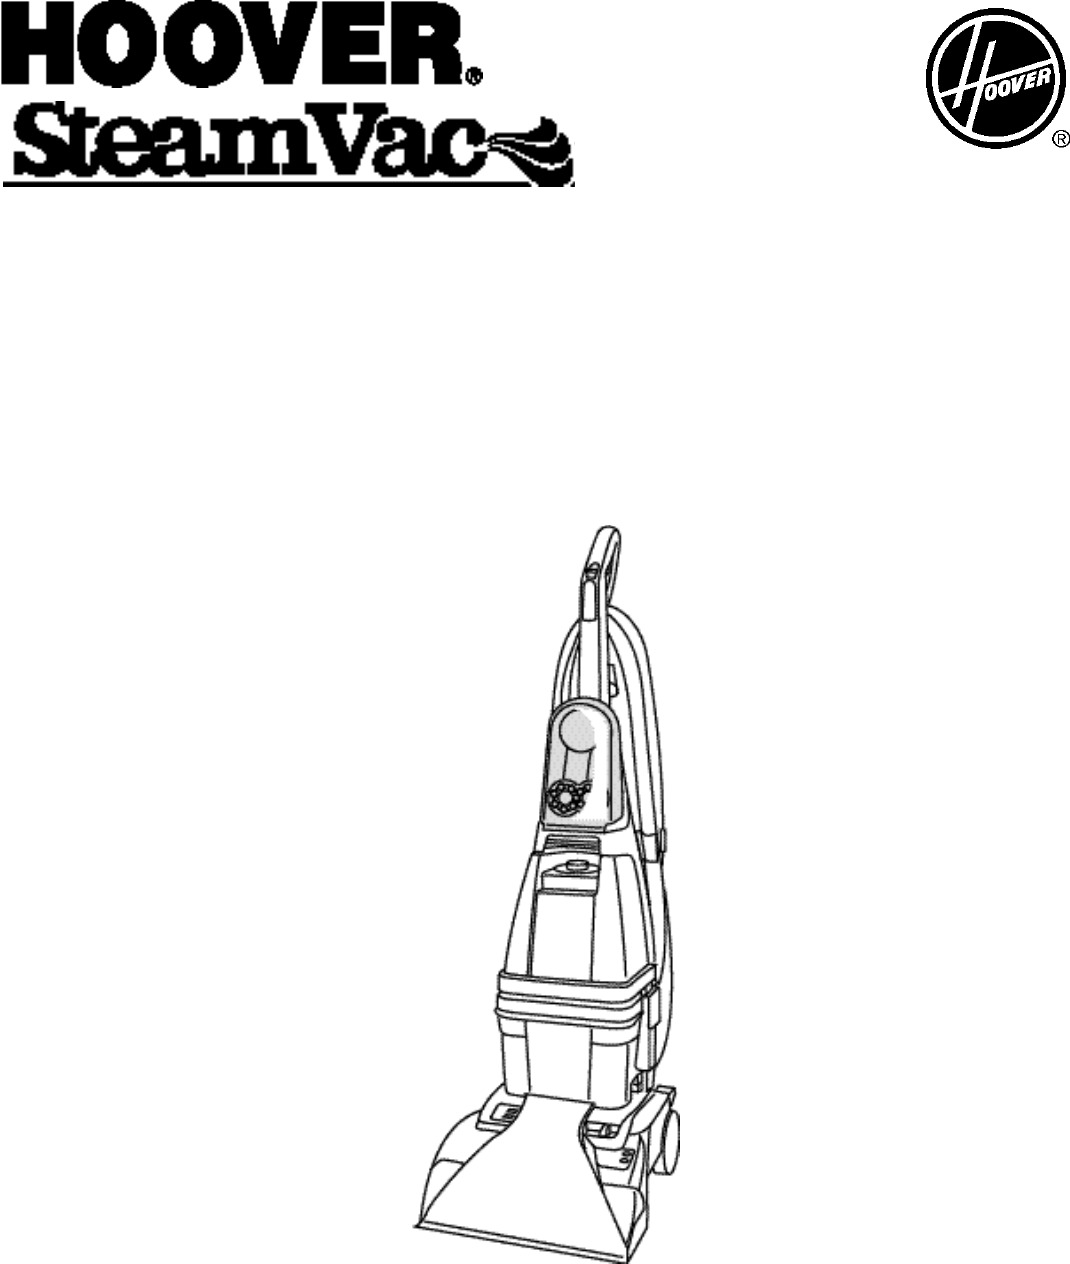 Hoover steamvac dual v parts manual